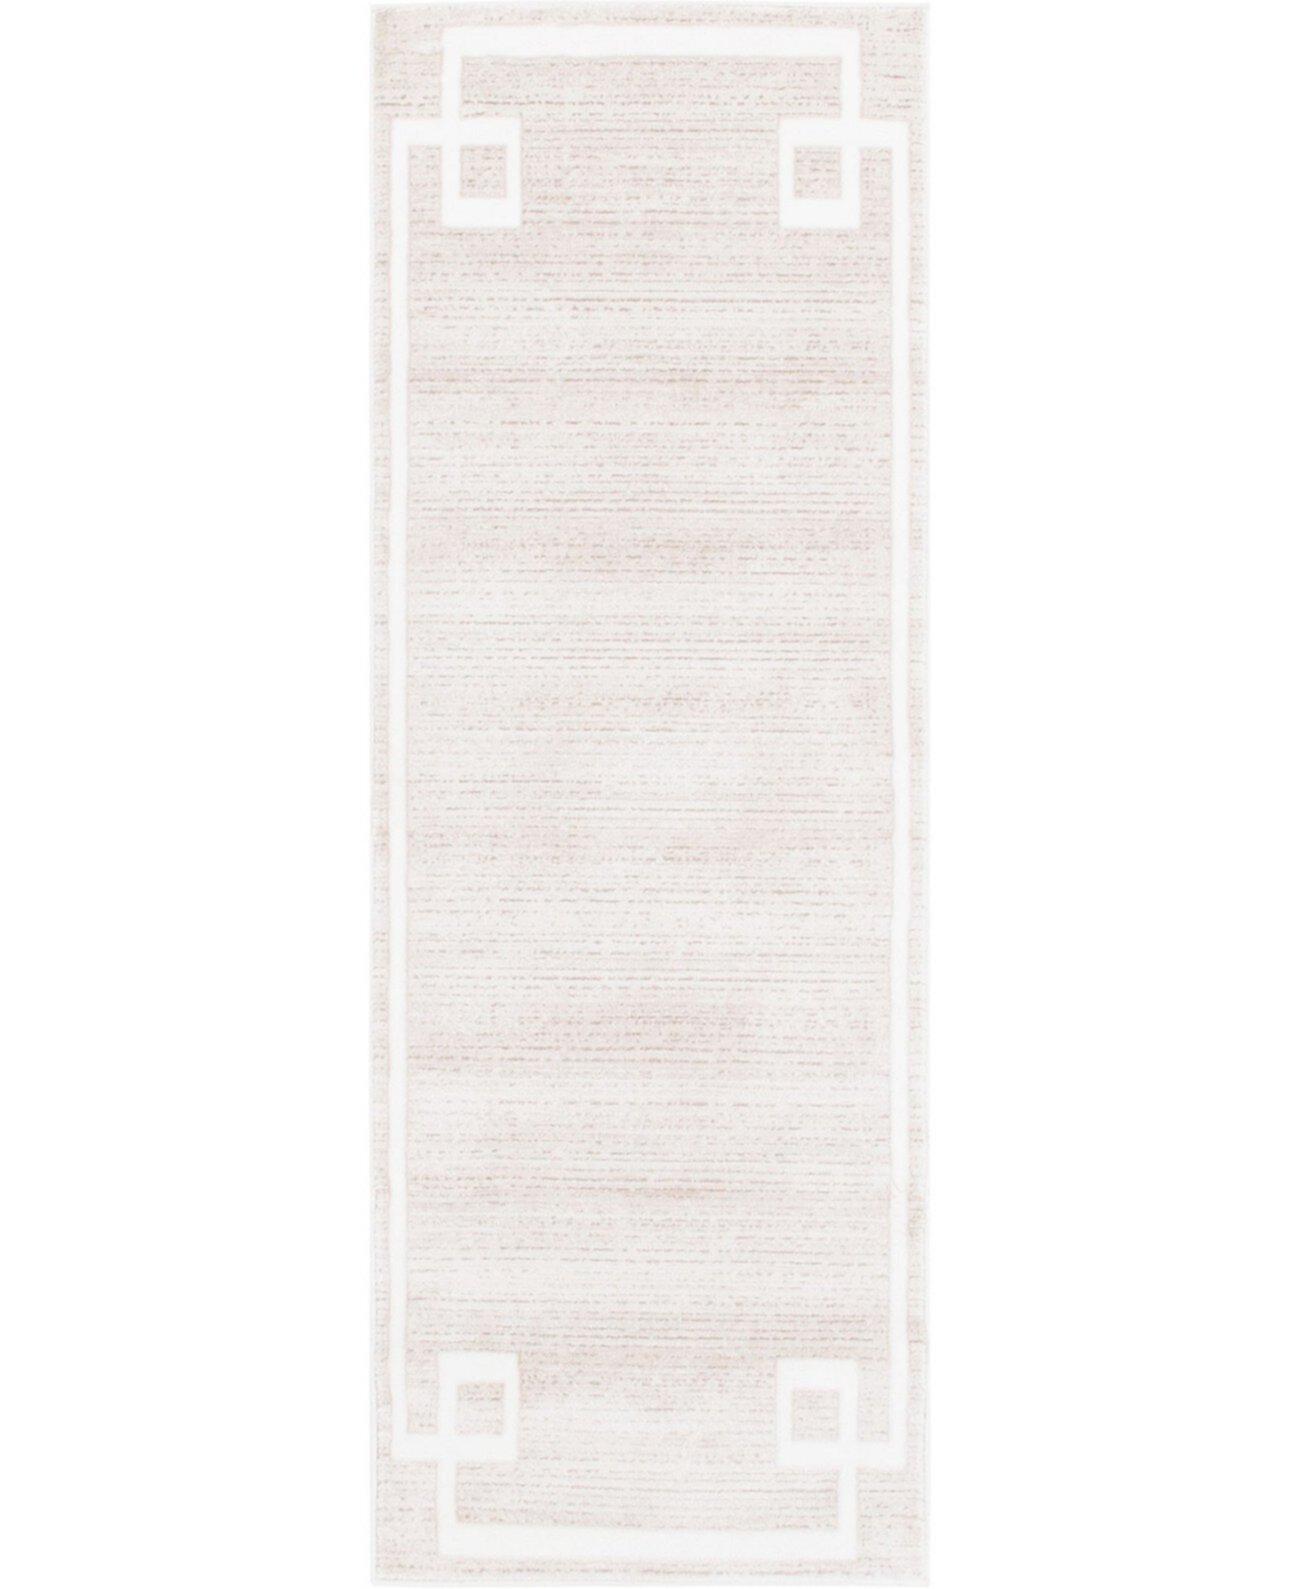 Lenox Hill Uptown Jzu005 Бежевый коврик для беговой дорожки размером 2 х 6 футов Jill Zarin